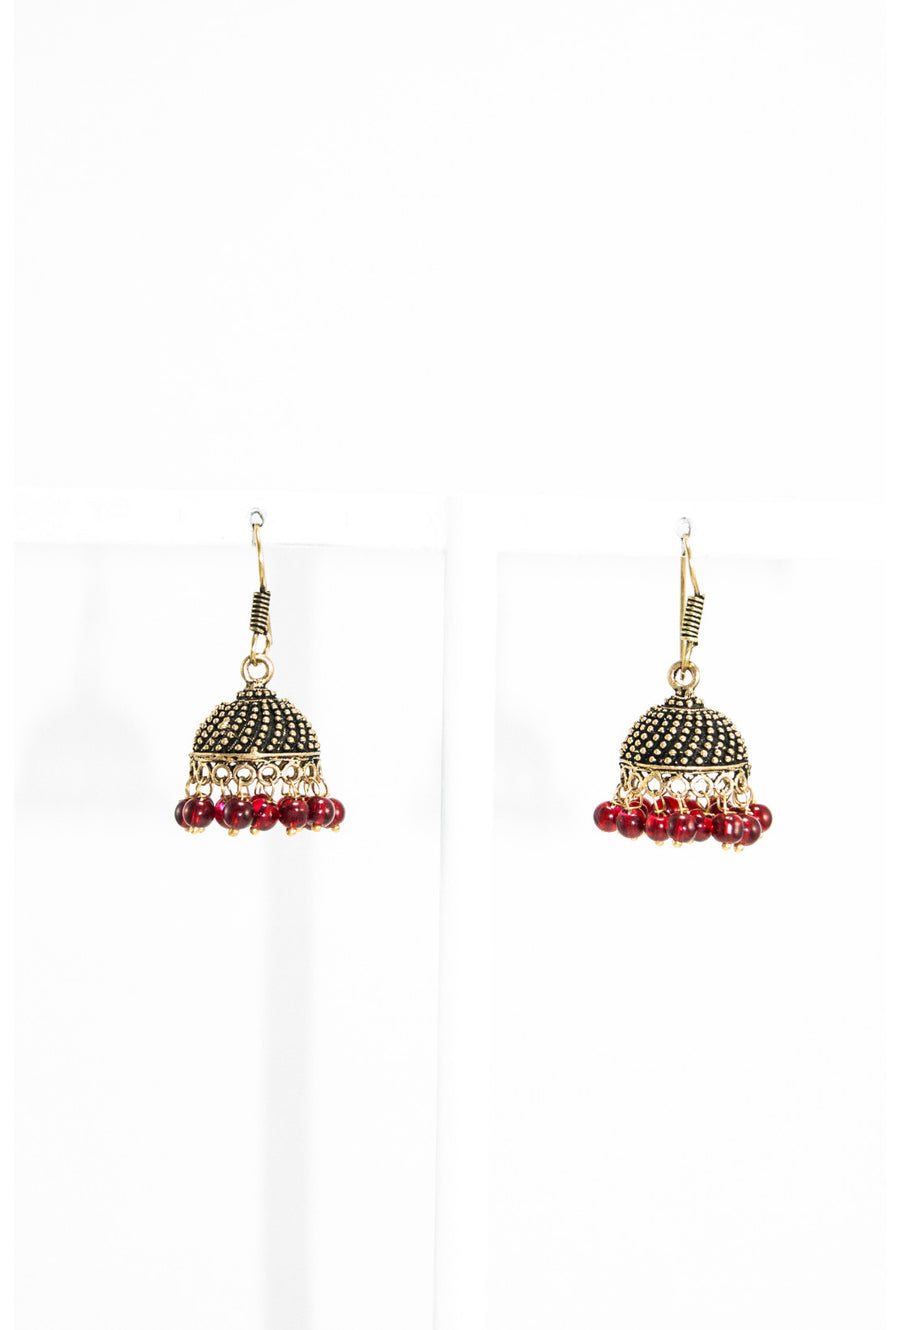 Gold domed earrings with maroon earrings - Desi Royale